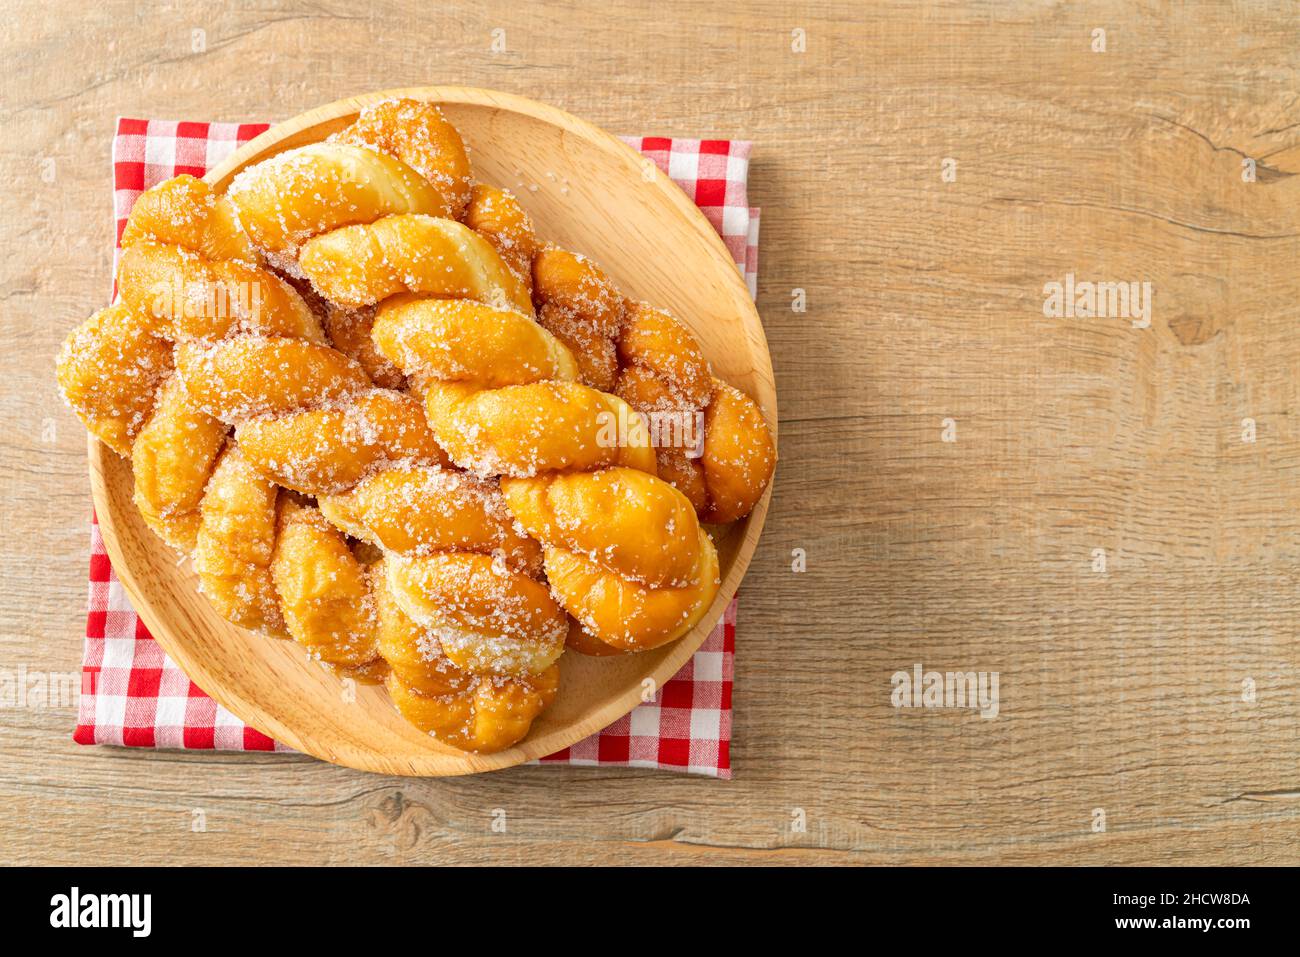 sugar doughnut in spiral shape on wooden plate Stock Photo